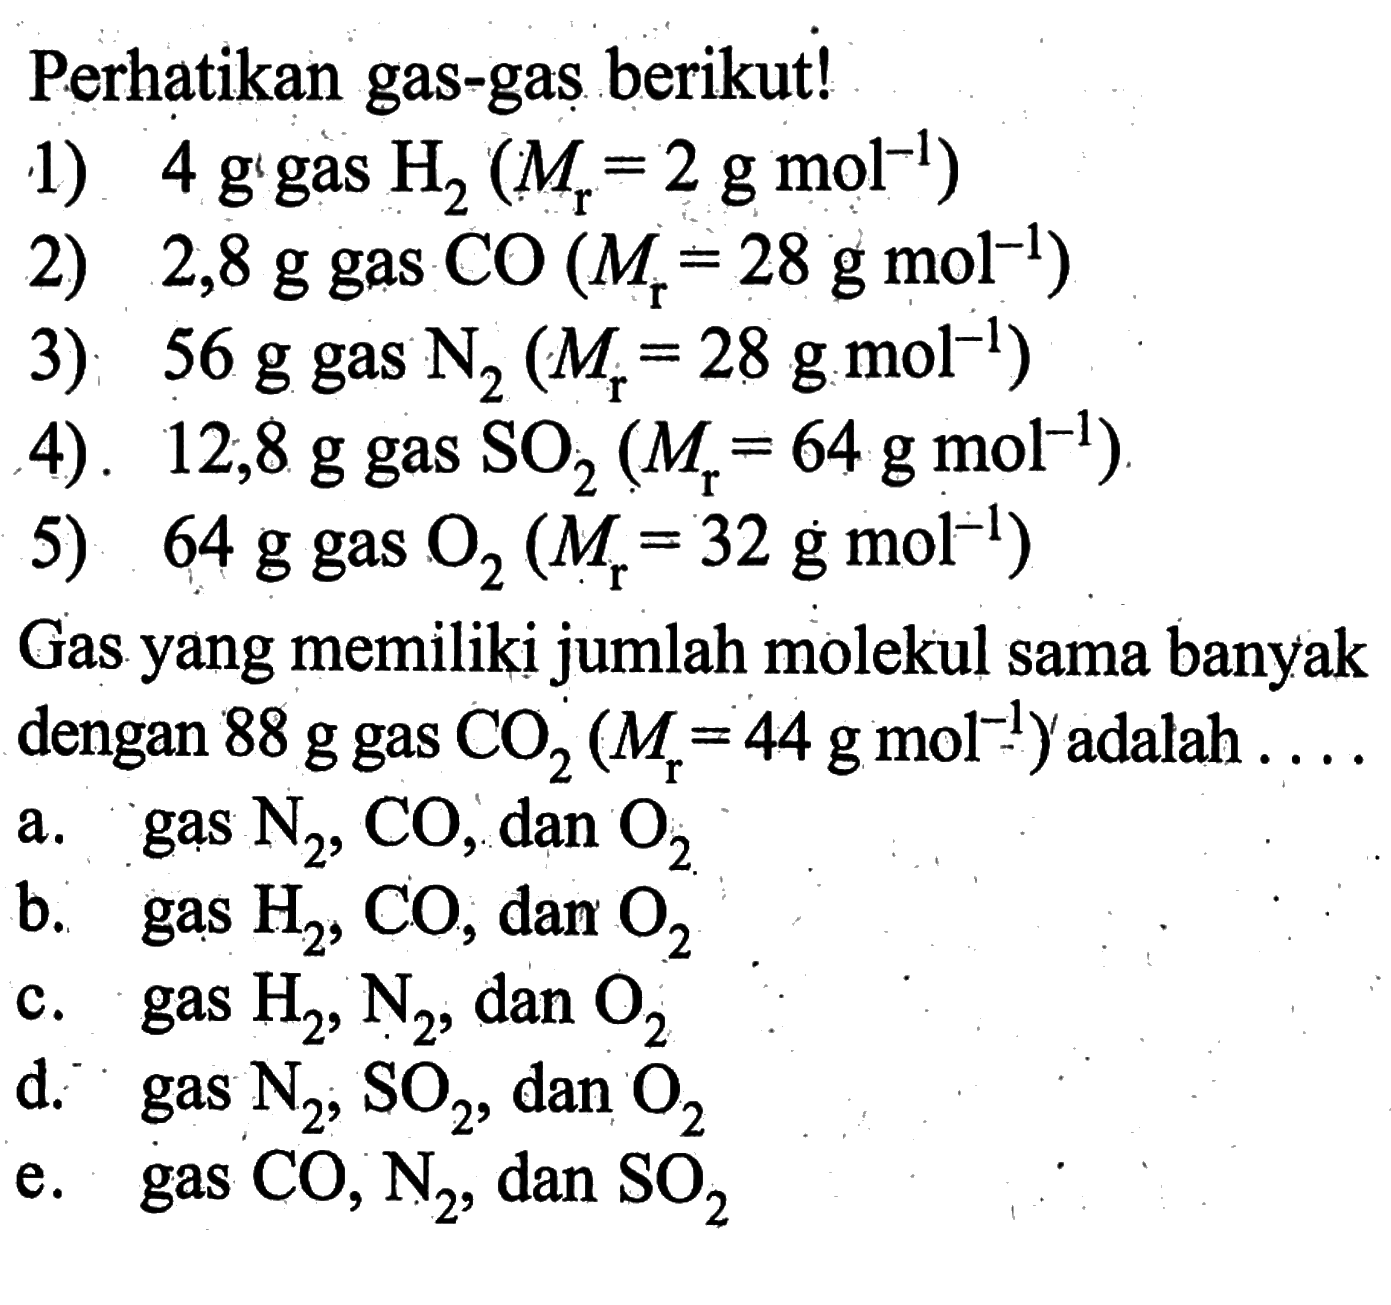 perhatikan gas-gas berikut! 1)  4 g gas H2(Mr=2 g mol^-1) 2) 2,8 g gas CO(Mr=28 g mol^-1) 3) 56 g  gas N2(Mr=28 g mol^-1) 4). 12,8 g gas SO2(Mr=64 g mol^-1) 5) 64 g gas O2(Mr=32 g mol^-1) Gas yang memiliki jumlah molekul sama banyak dengan 88 g gas CO2(Mr=44 g mol^-1) adalah  ... a. gas N2, CO, dan O2 b. gas H2, CO, dar O2 c. gas H2, N2, dan O2 d. gas N2, SO2, dan O2 e. gas CO, N2, dan SO2 